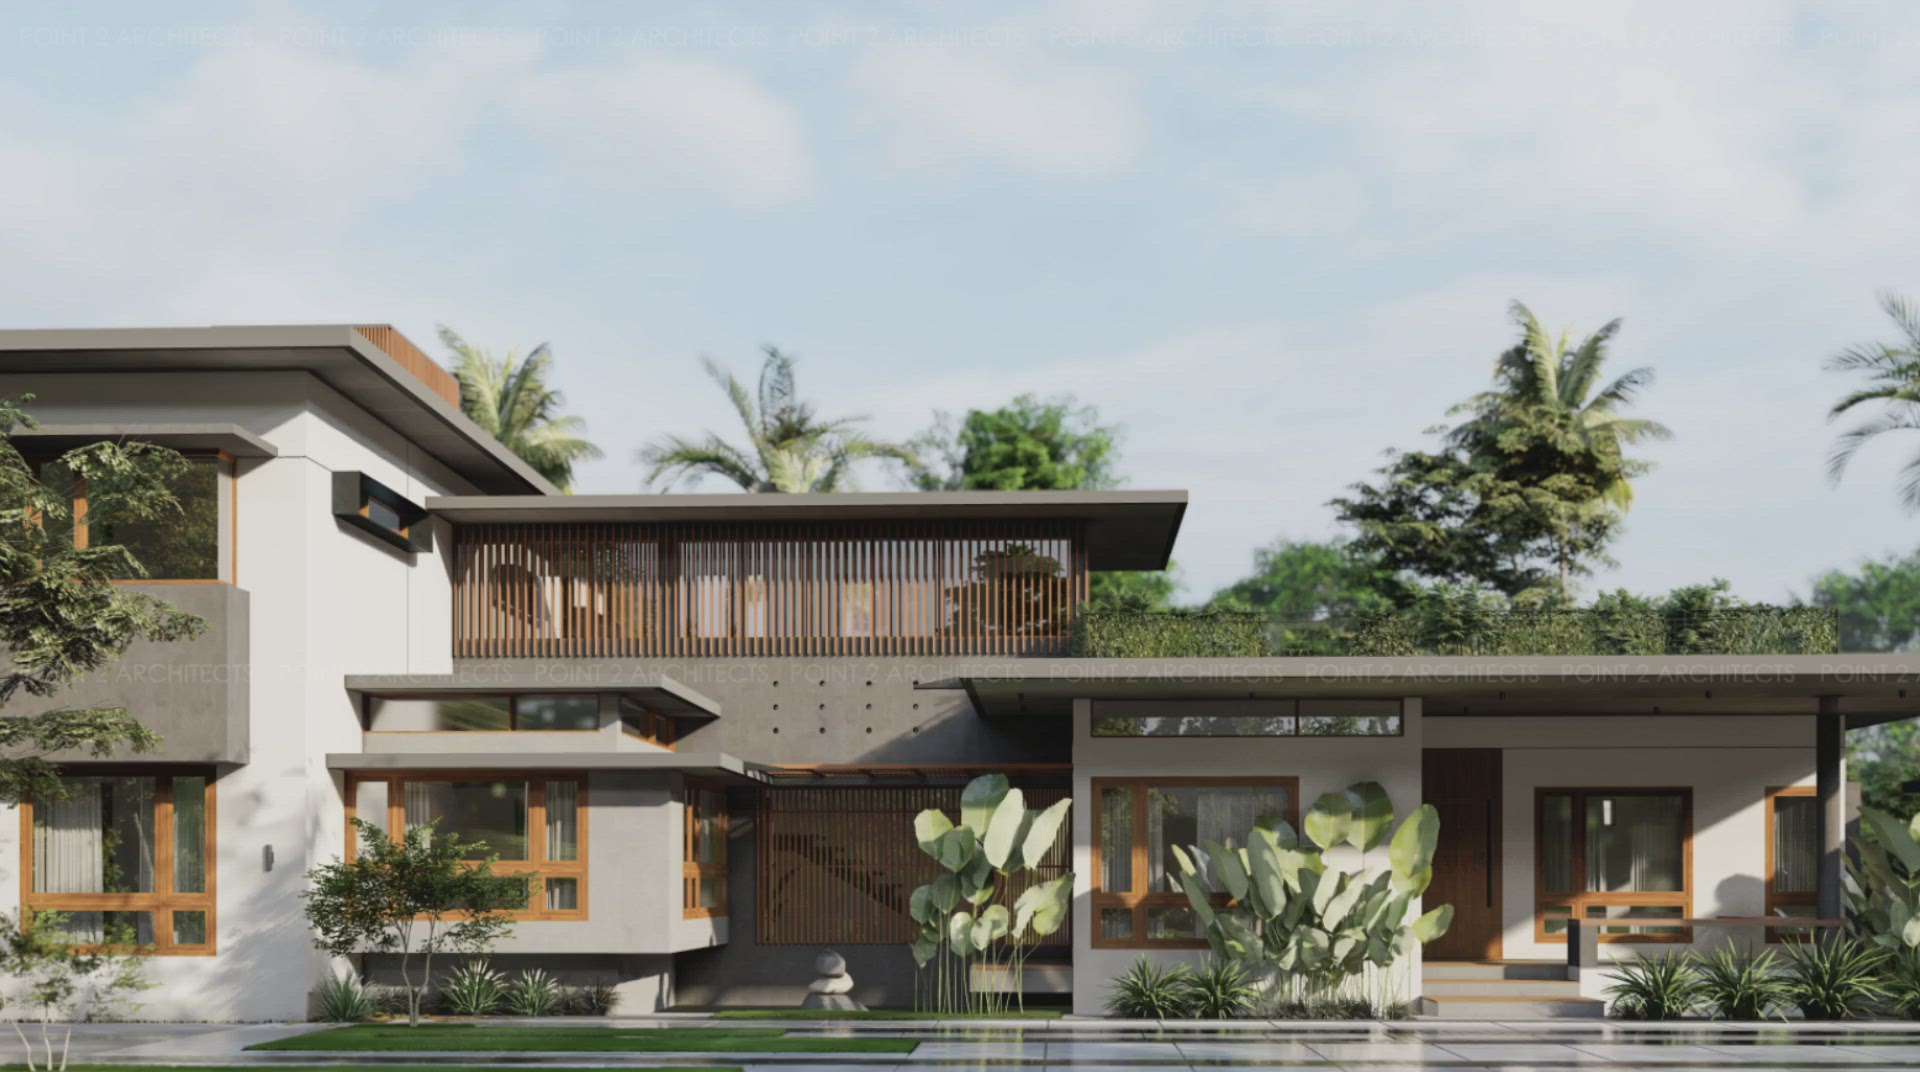 3000 sqft Contemporary Residence at Calicut



 #calicutresidence #residenceproject #residenceproject #HouseDesigns #kolopost #koło  #architecturedesigns #Kozhikode #kozhikoderesidence 

 #